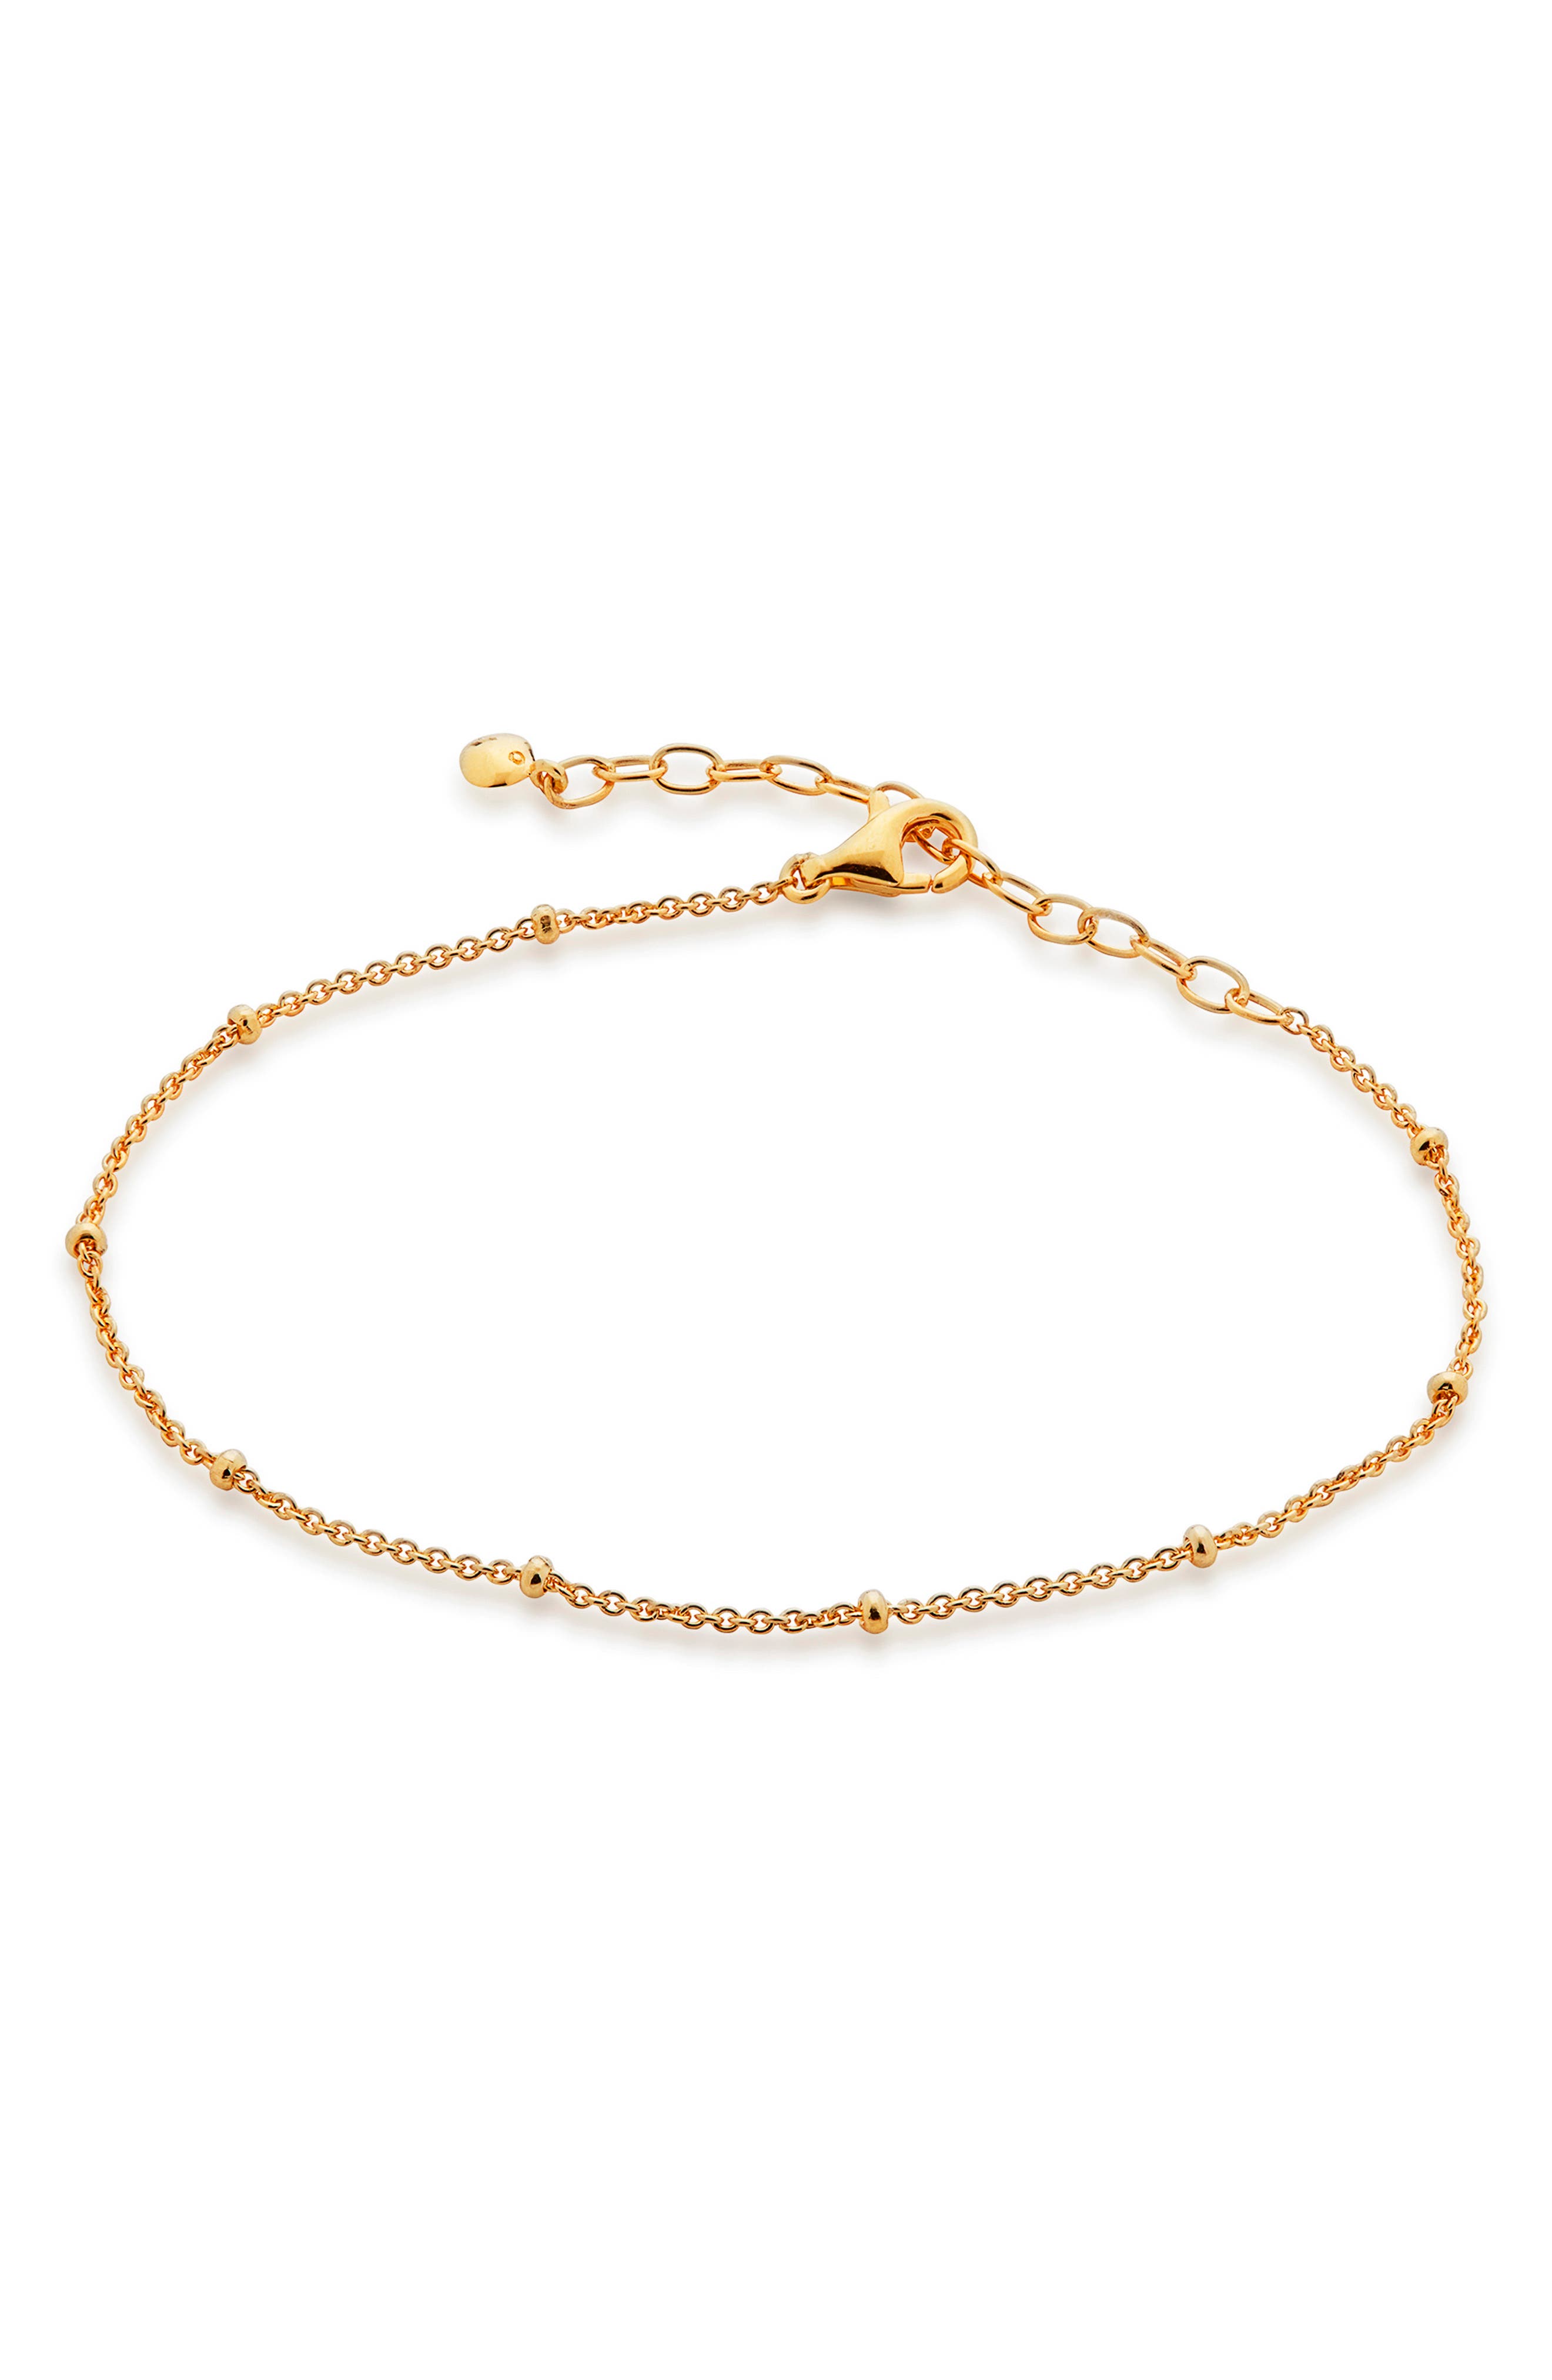 Statement gold bracelet \u2022 Twisted Link Chain Bracelet \u2022 Trendy women bracelet \u2022 Thick Chain Bracelet